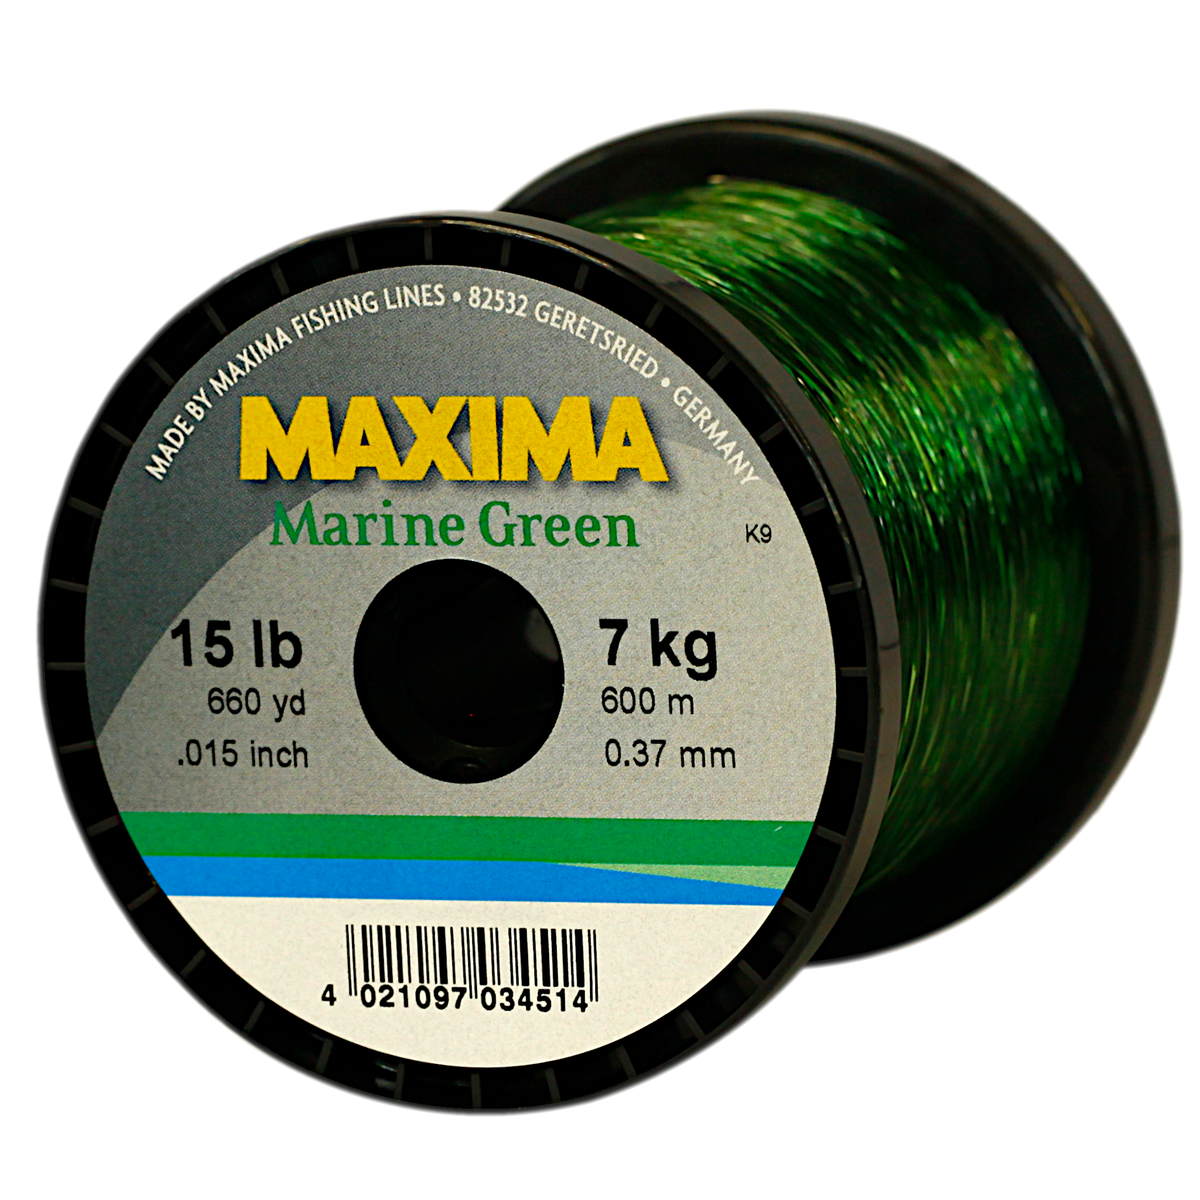 Maxima Nylon Fishing Line, 7KG/15LB 0.37MM, Colour Marine Green, 600M Spool, Shop Today. Get it Tomorrow!